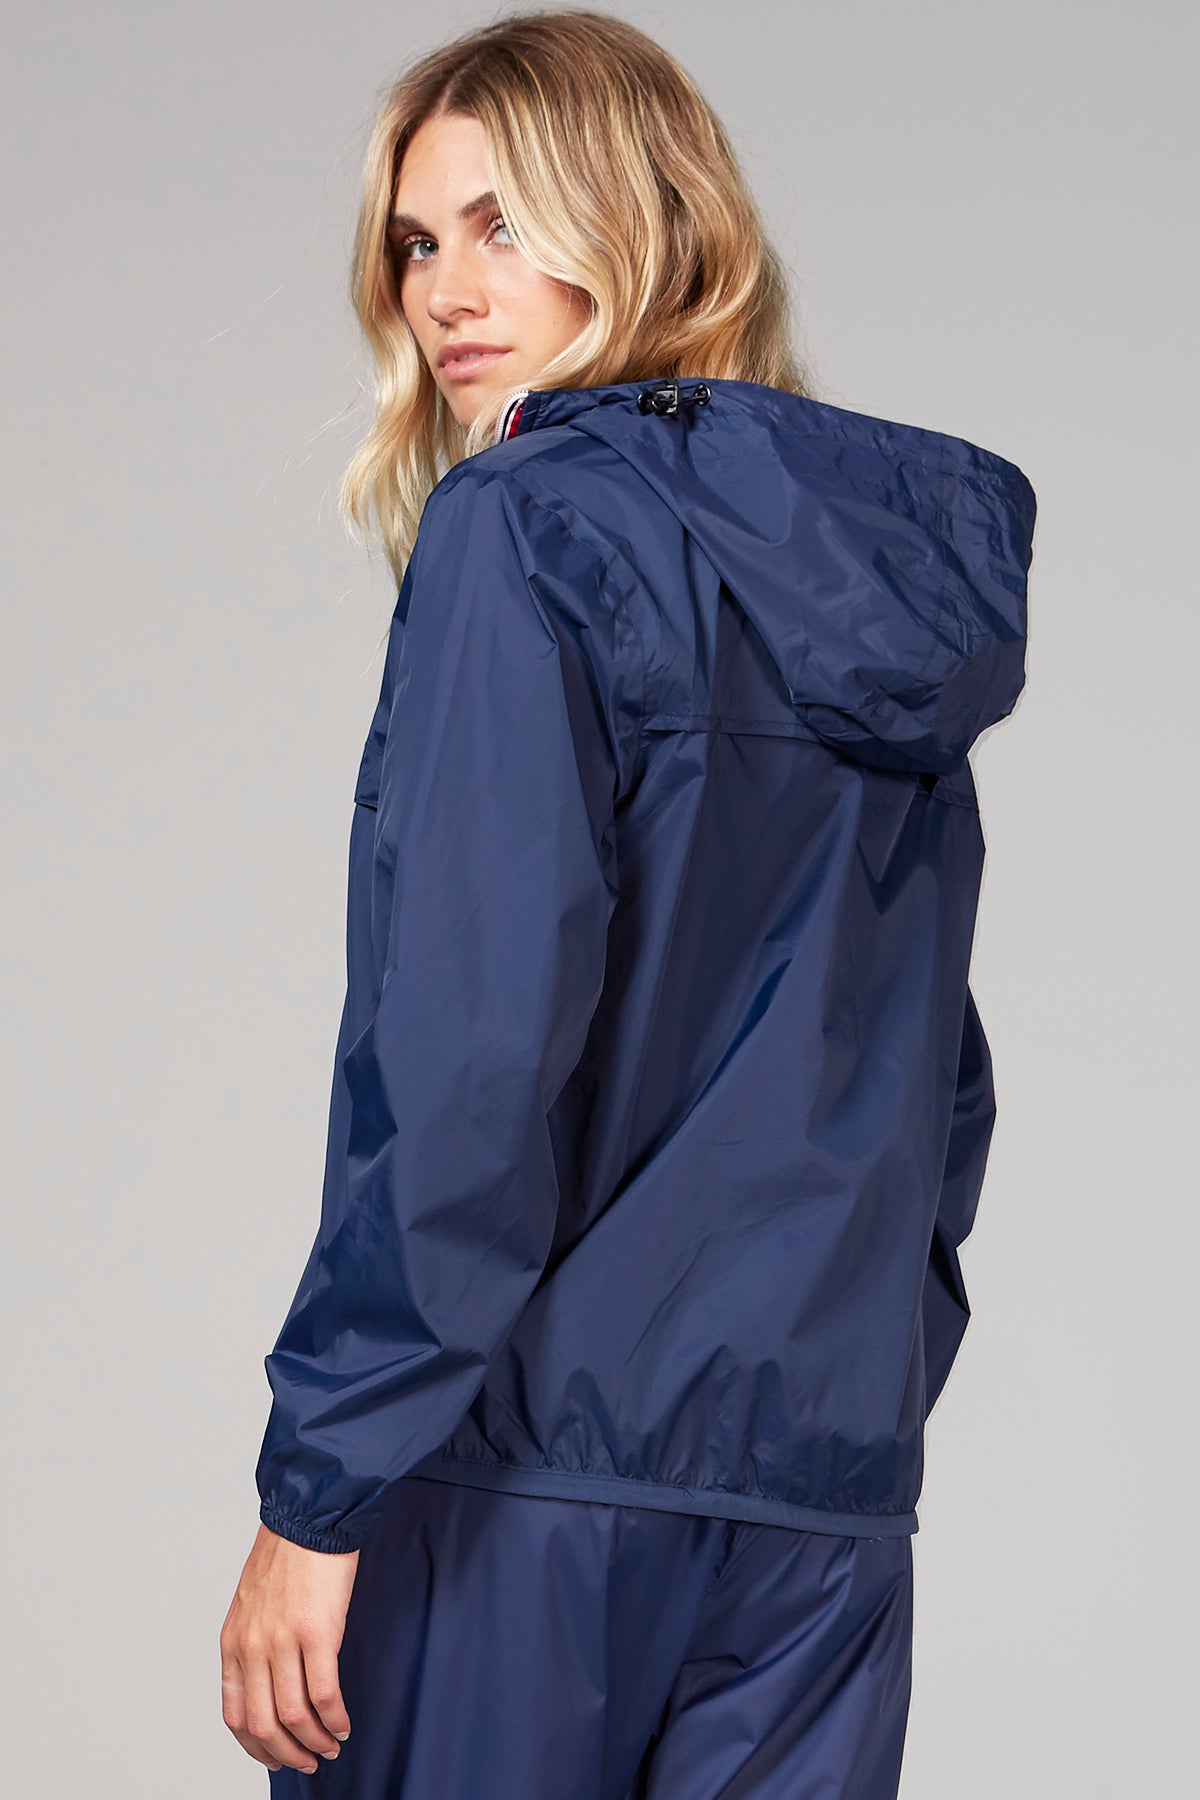 Alex - Navy Quarter Zip Packable Rain Jacket - O8lifestyle.